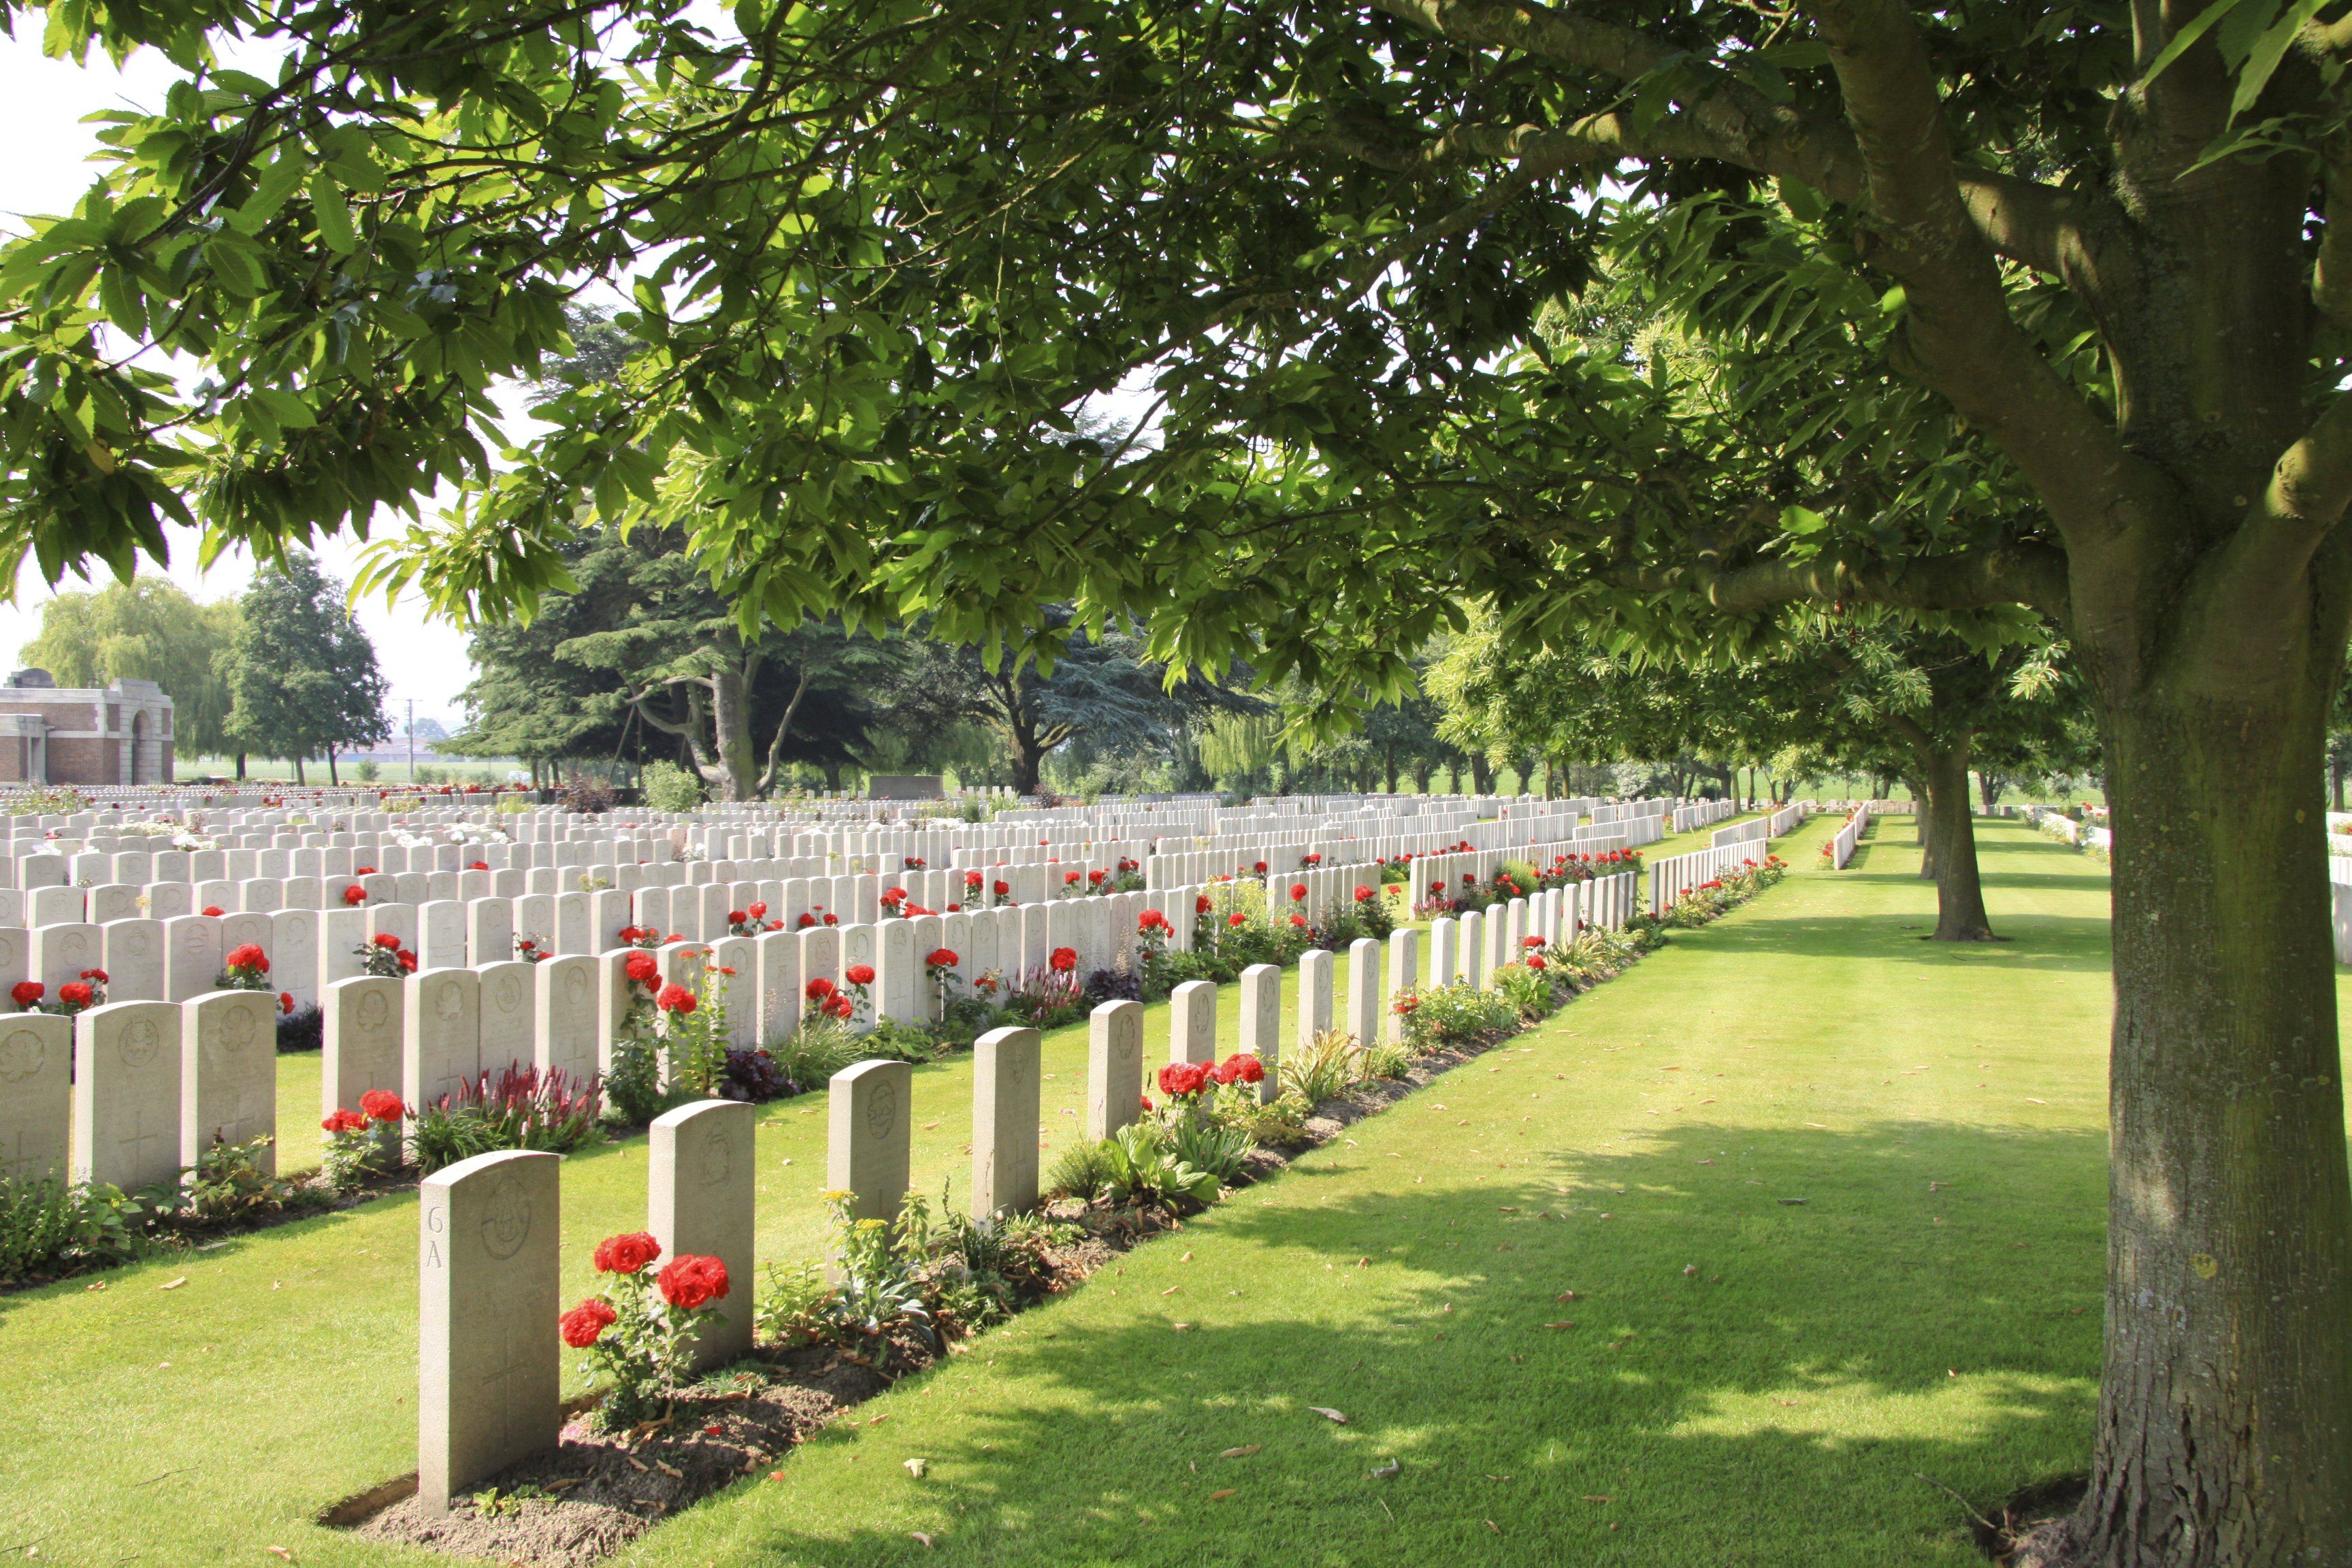 Lijssenthoek Military Cemetery with rows of gravestones